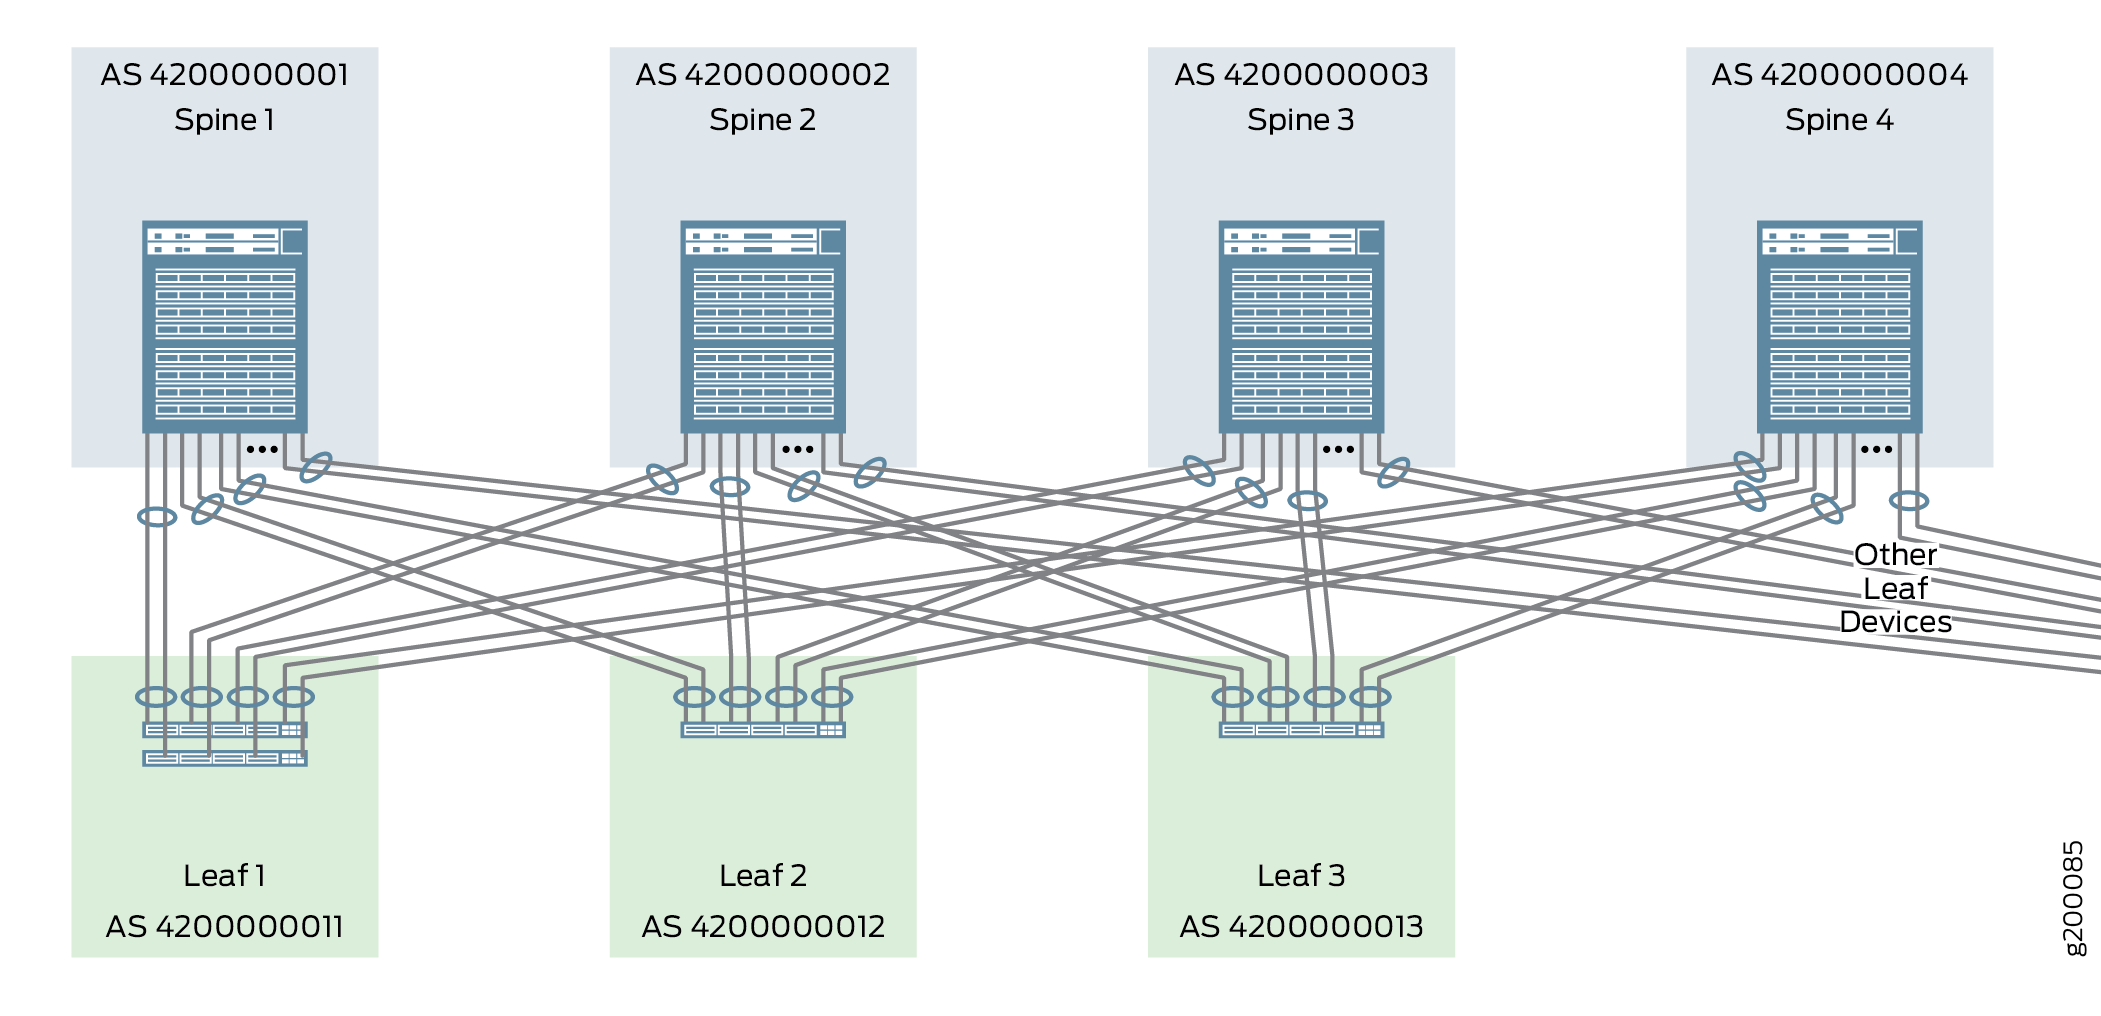 Three-Stage IP Fabric Underlay Network